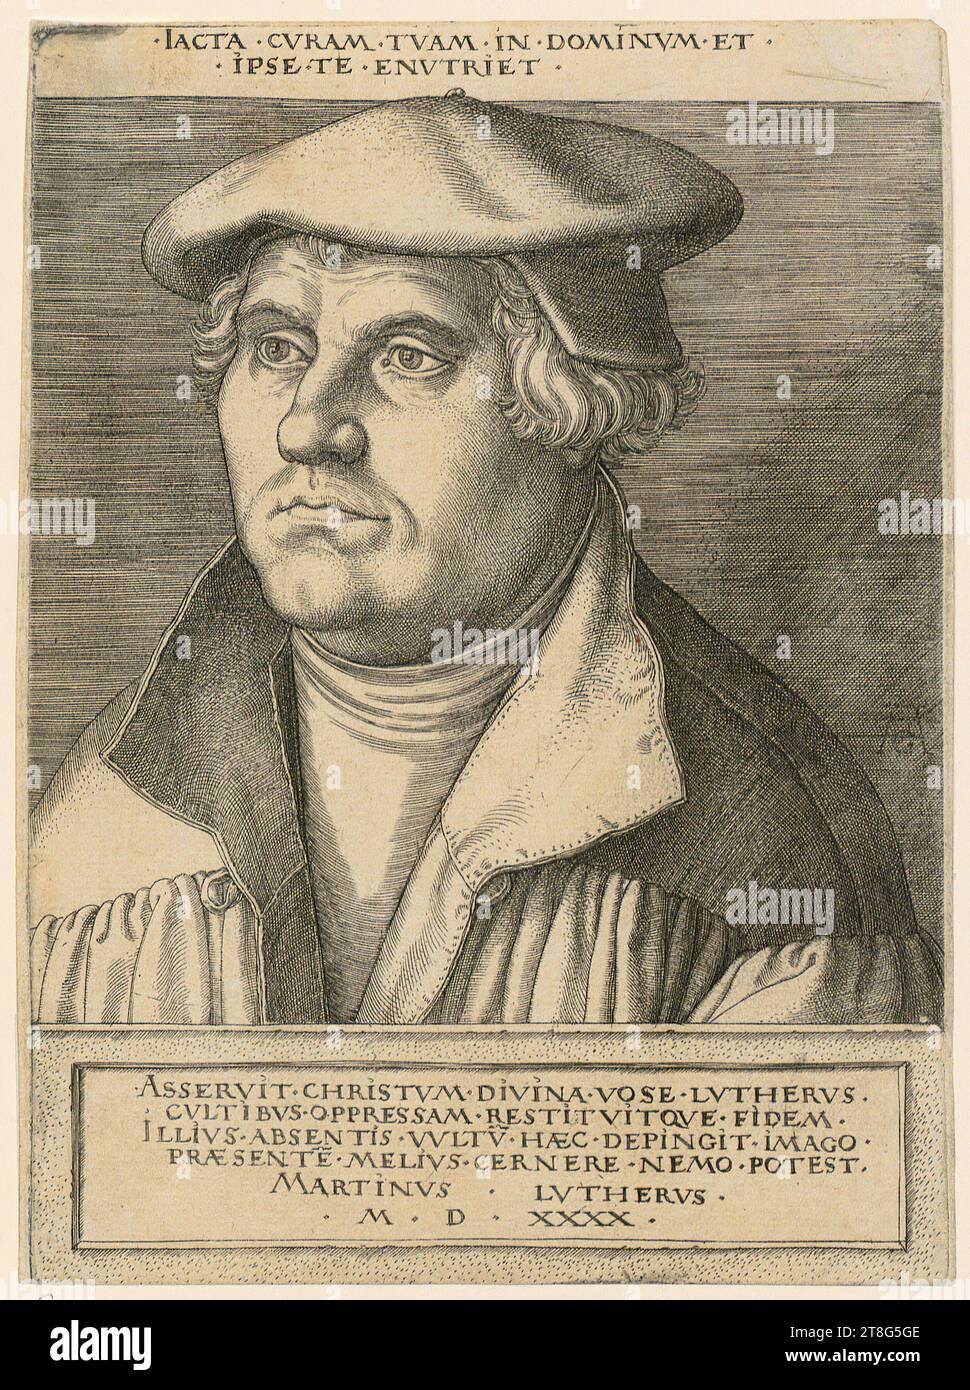 Heinrich Aldegrever (1502 - 1555, 1561)Hans Brosamer (1500 c. - c. 1554), after, portrait of Martin Luther, print date: 1540, copperplate engraving, sheet size: 17.3 x 12.8 cm, top inscribed '.ICTA.CVRAM.TVAM.IN.DOMINVM.ET.IPSE.TE.ENVTRIET'; middle right monogrammed 'AG Stock Photo